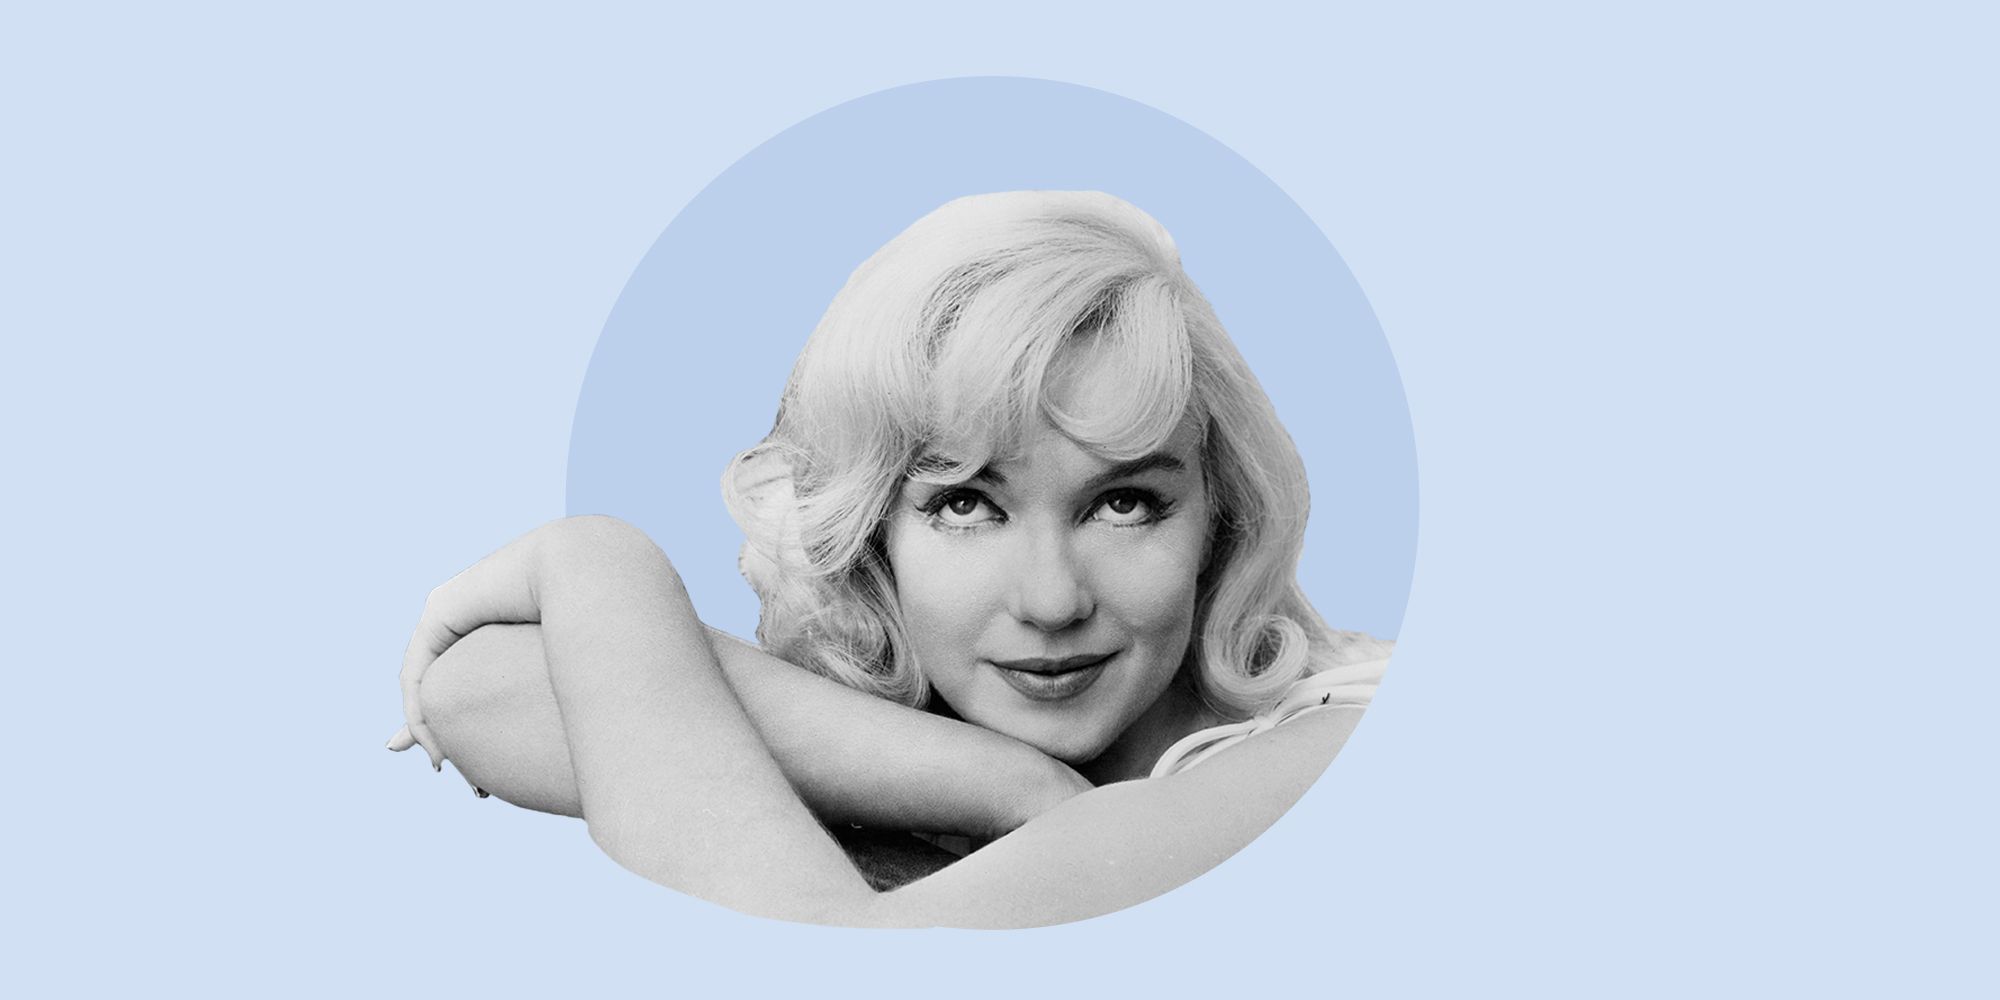 Marilyn Monroe Unposed - Candid Shots of Marilyn Monroe